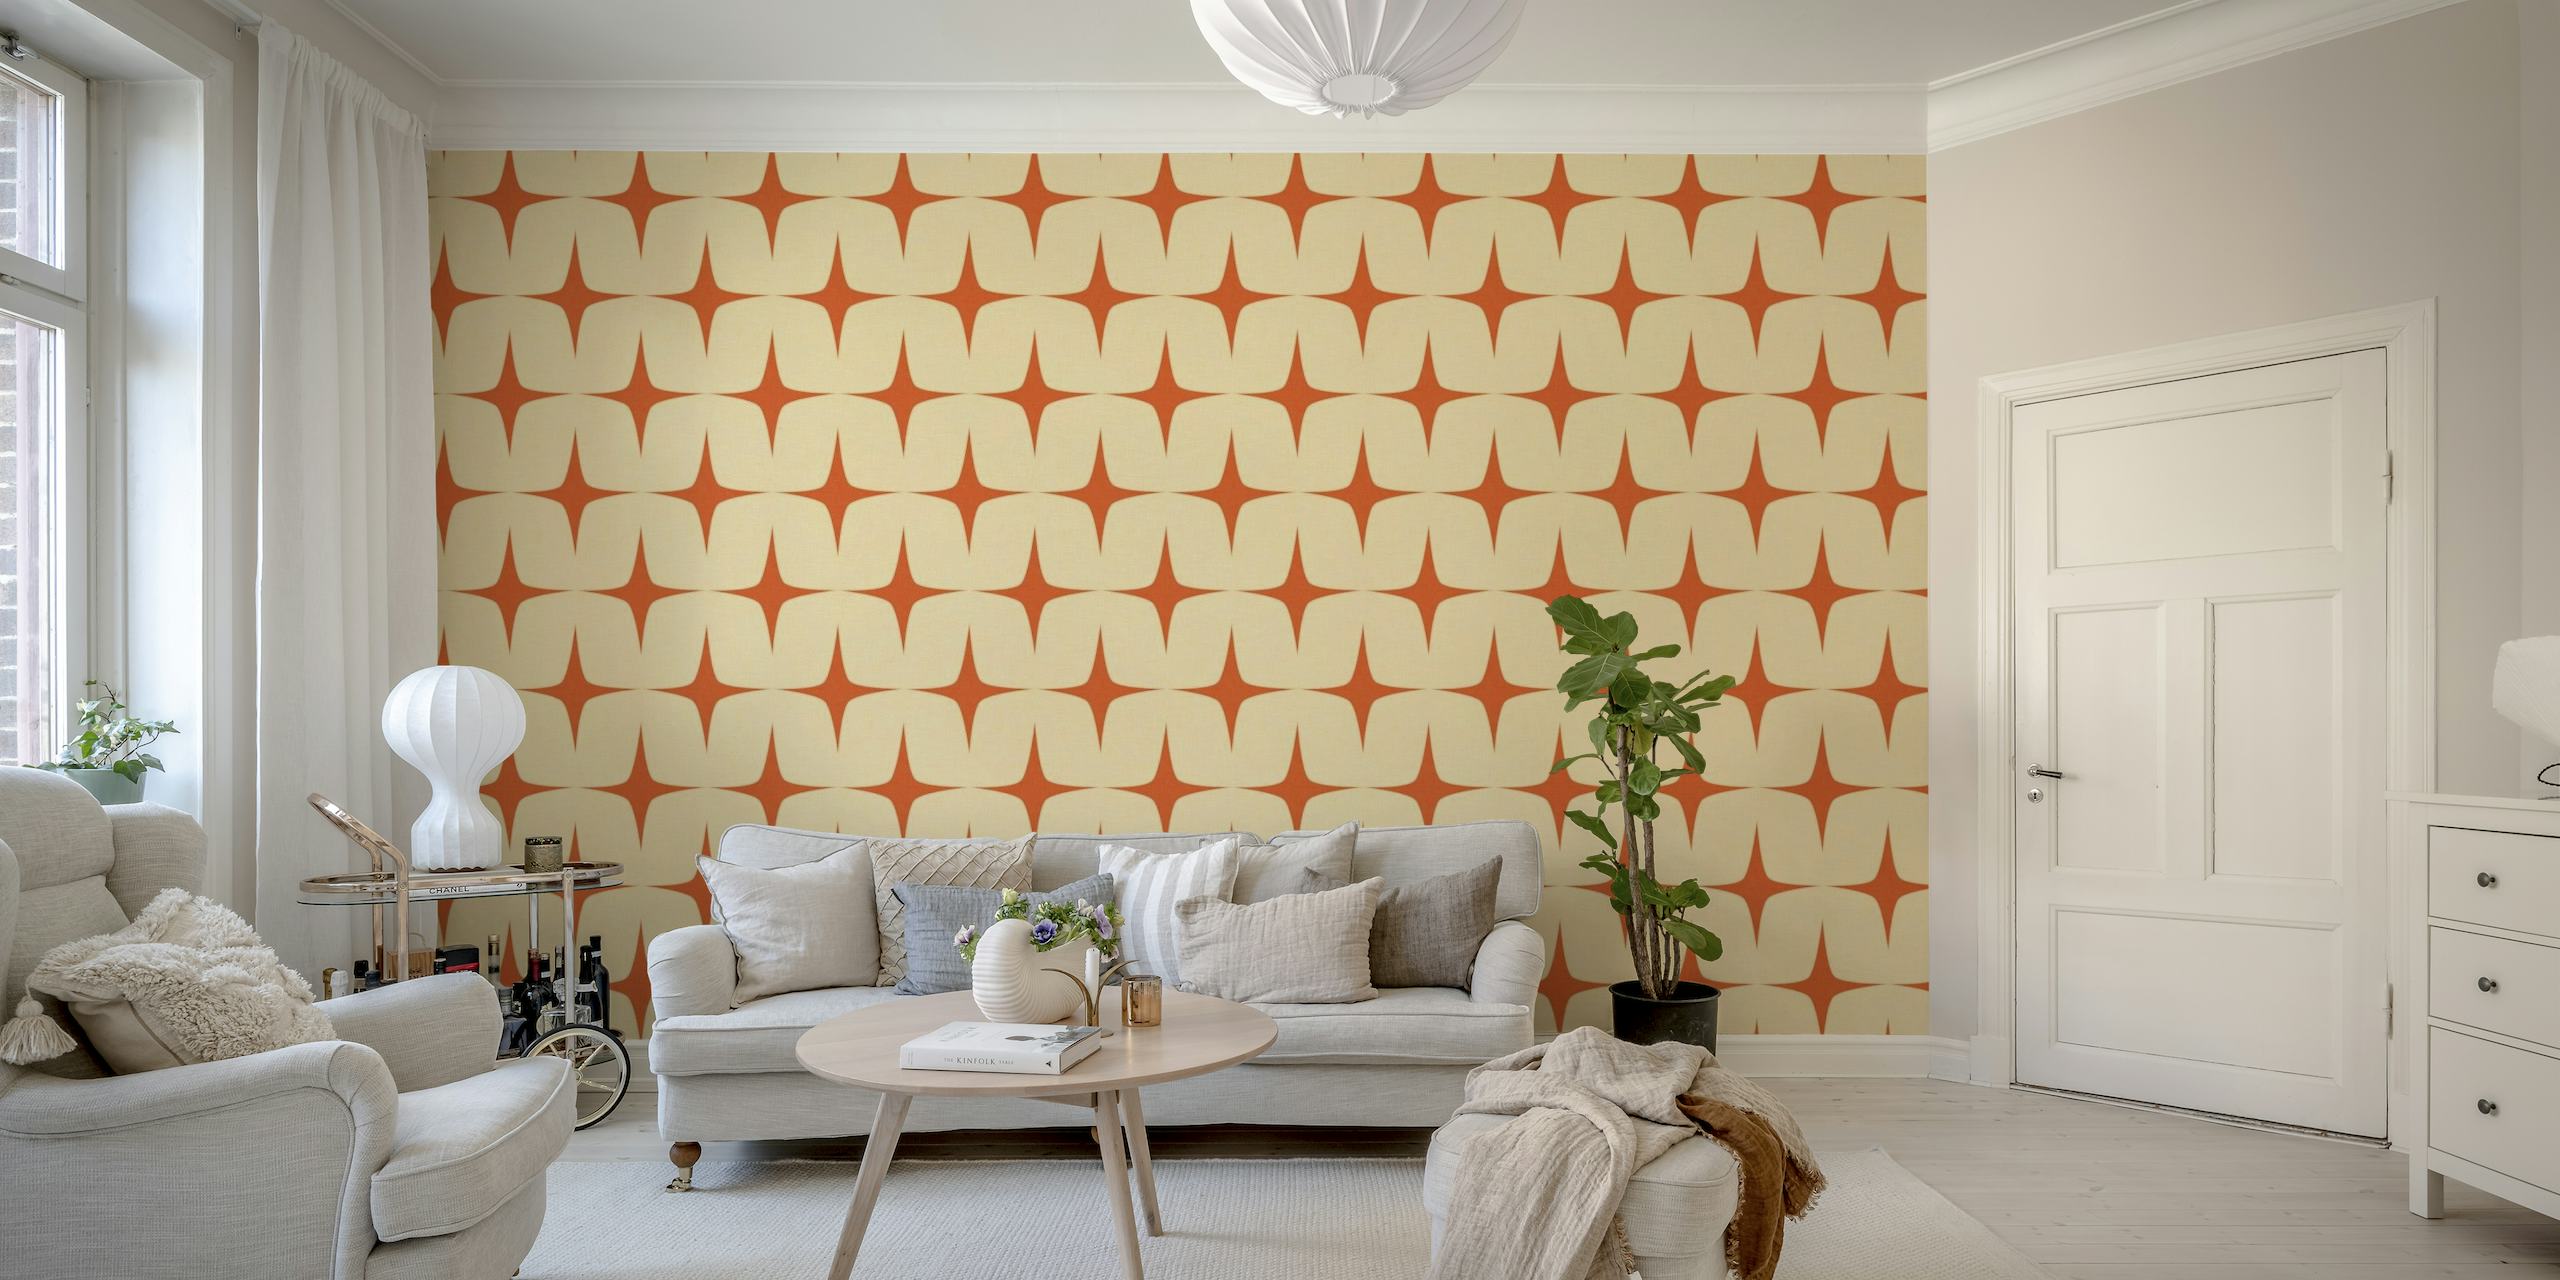 Starburst Orange geometric pattern wall mural